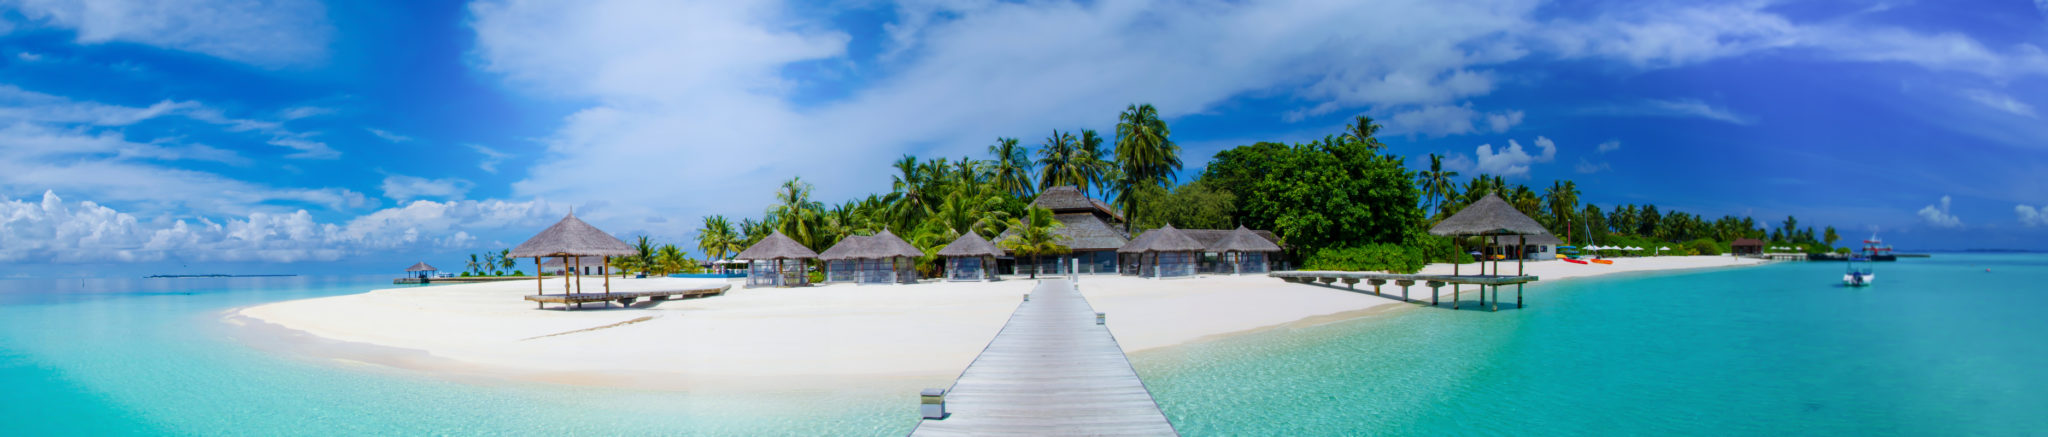 Panaroma Malediv